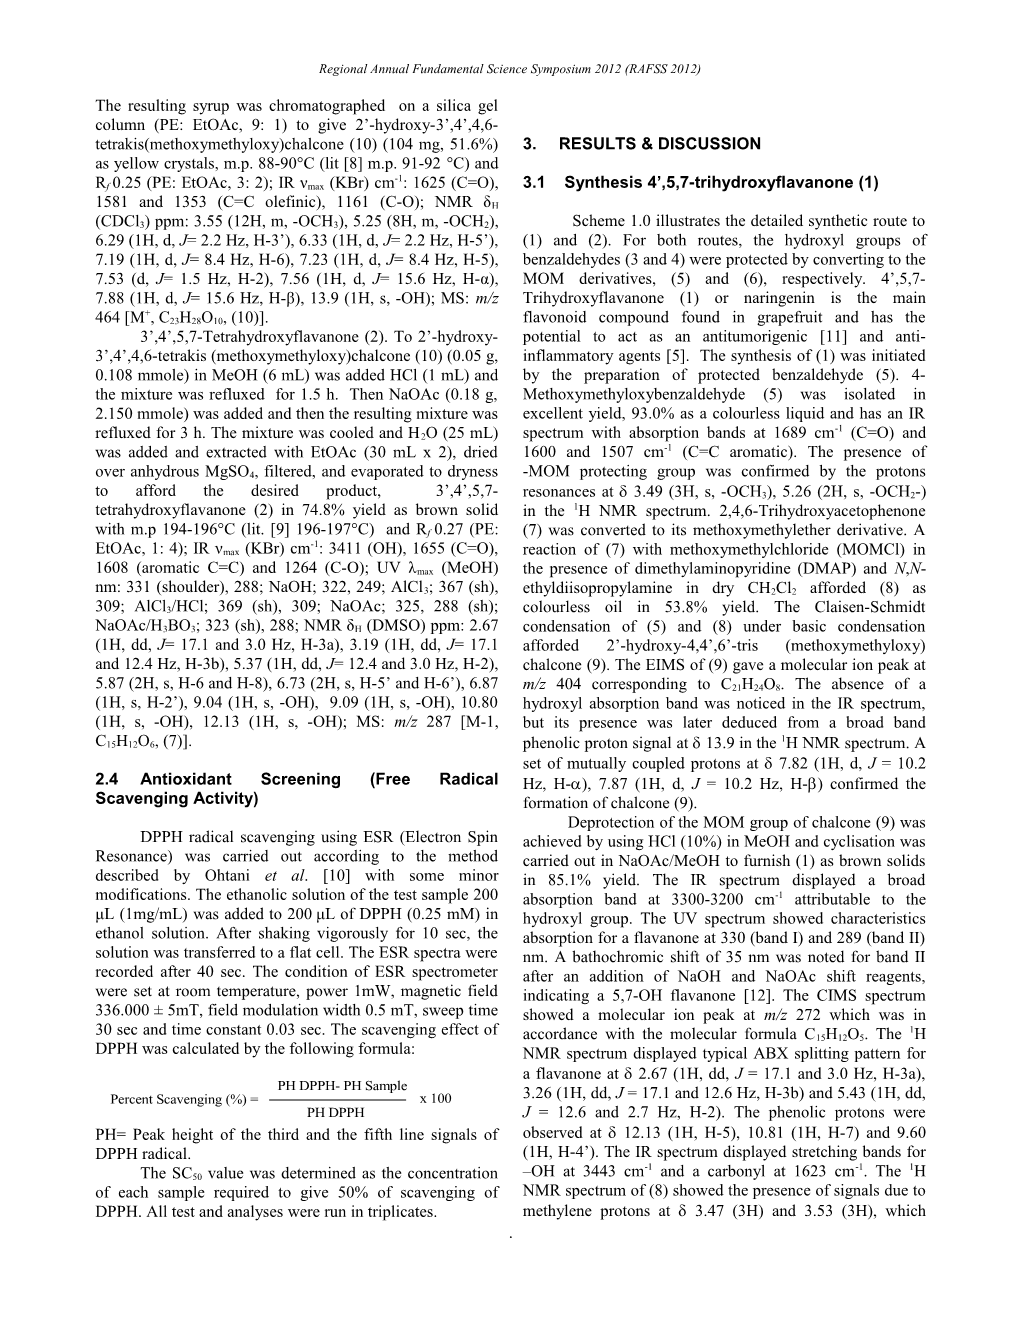 Synthesis of 4 ,5,7-Trihydroxyflavanone and 3 ,4 ,5,7-Tetrahydroxyflavanone and Antioxidant